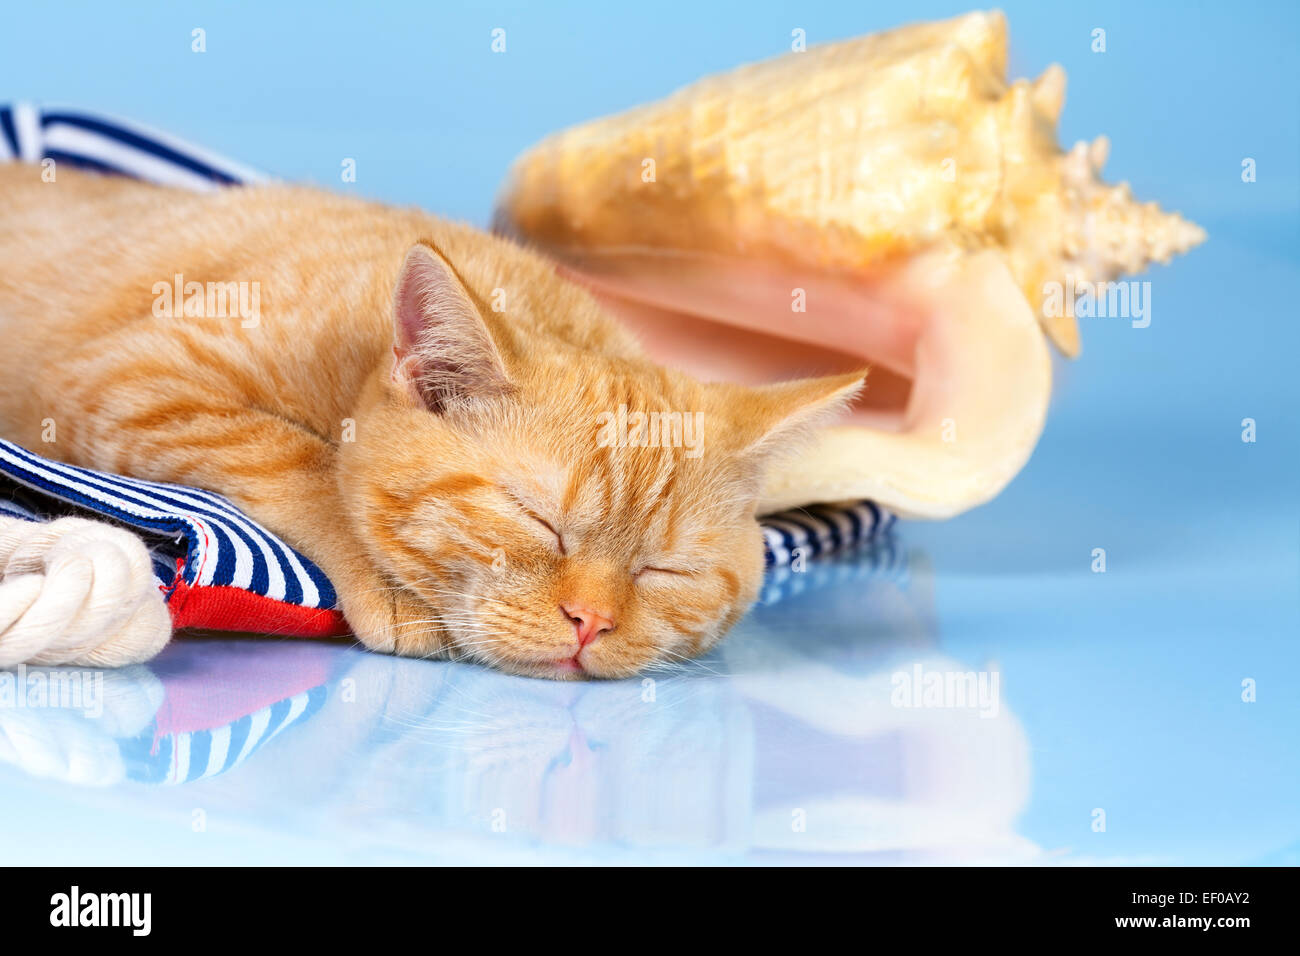 Beach scene. Cute red cat sleeping on beach bag near big shell Stock Photo